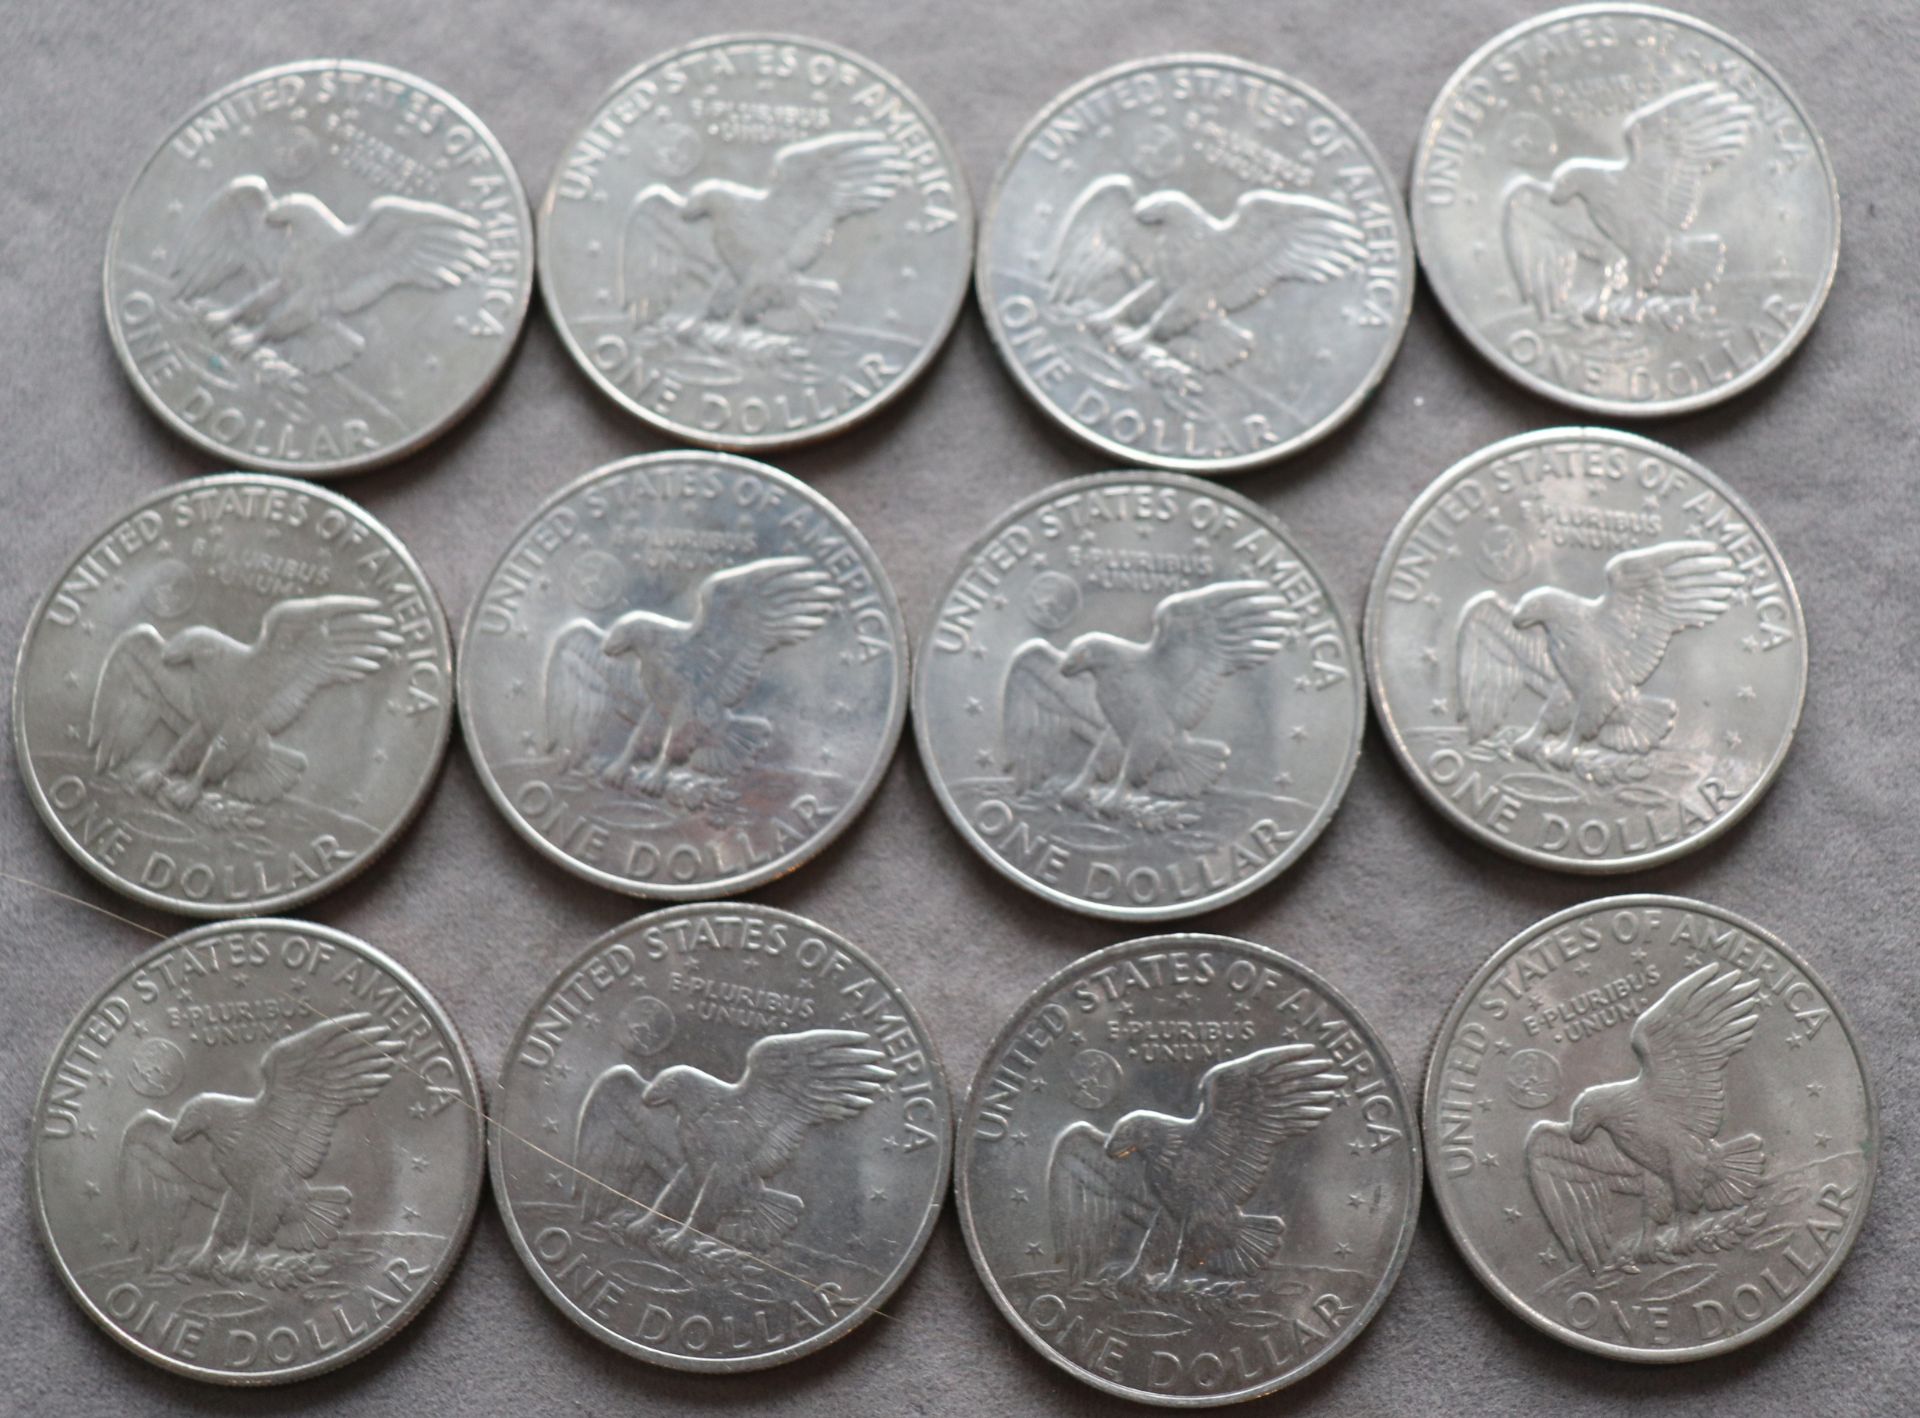 12 Eisenhower dollar coins 1971-1972 - Image 2 of 2